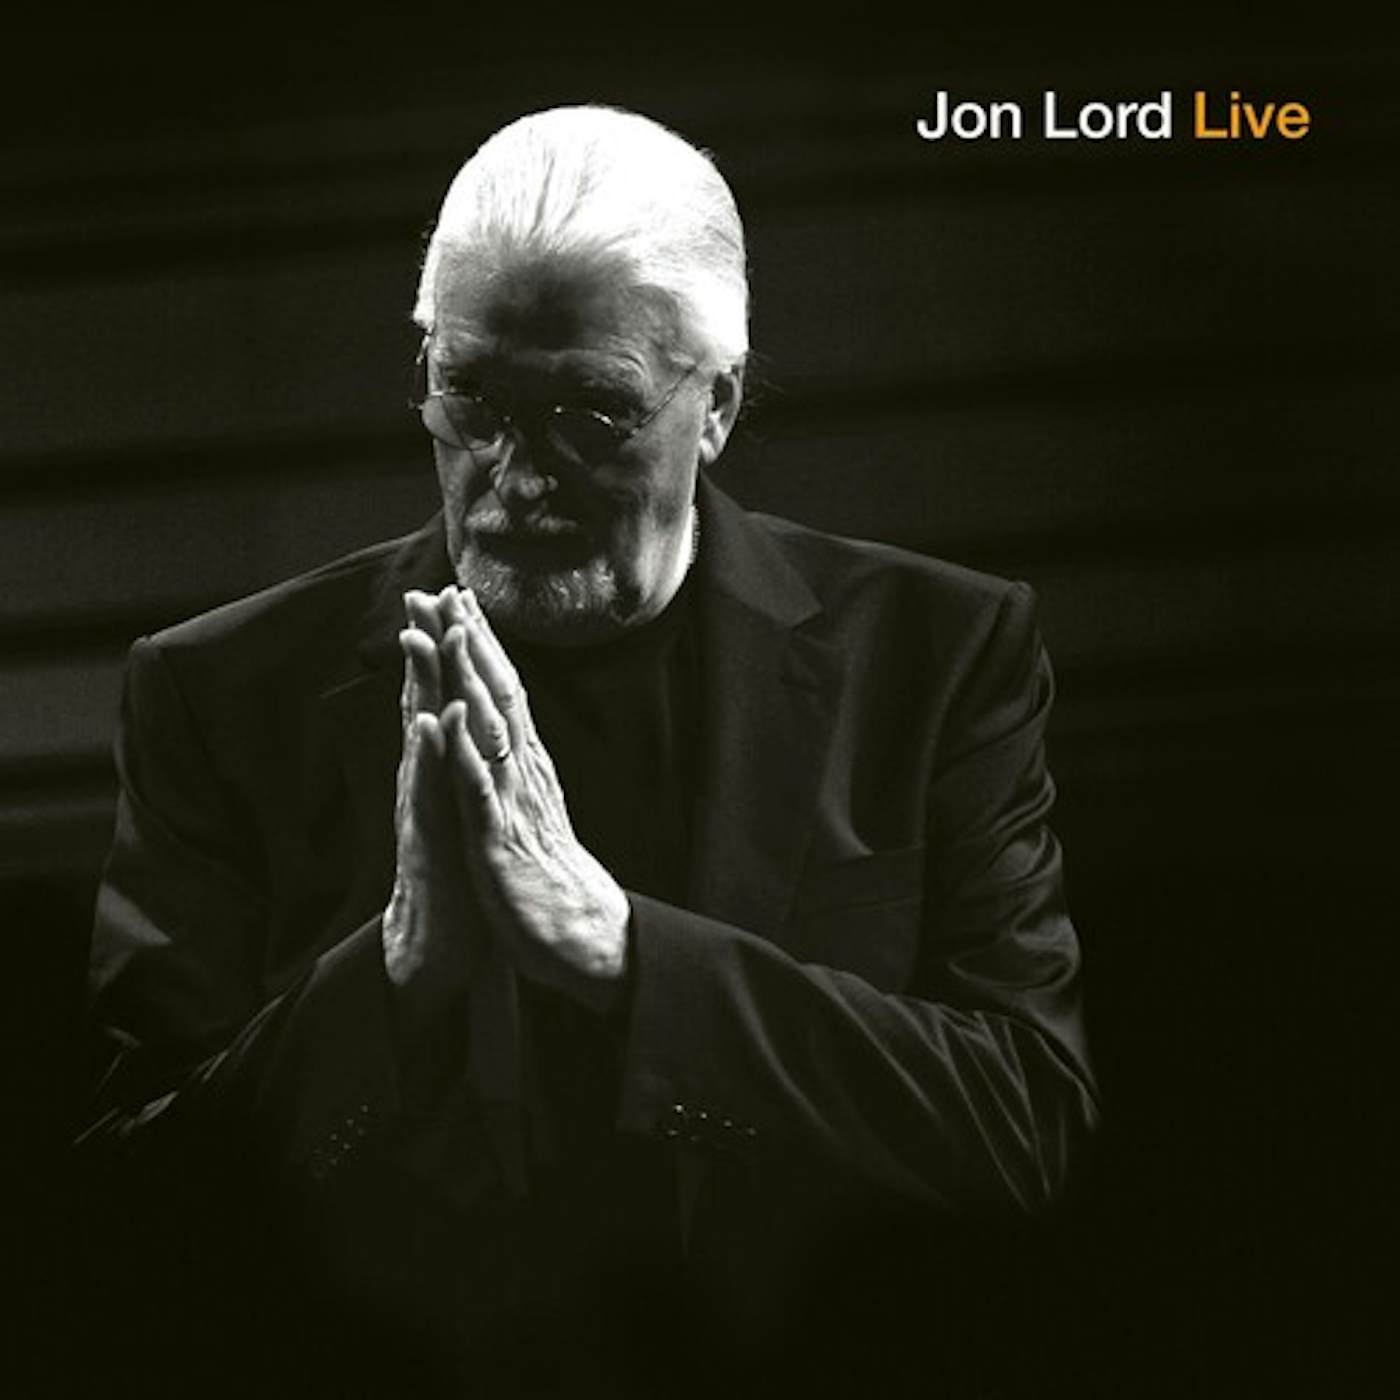 JON LORD (LIVE) Vinyl Record